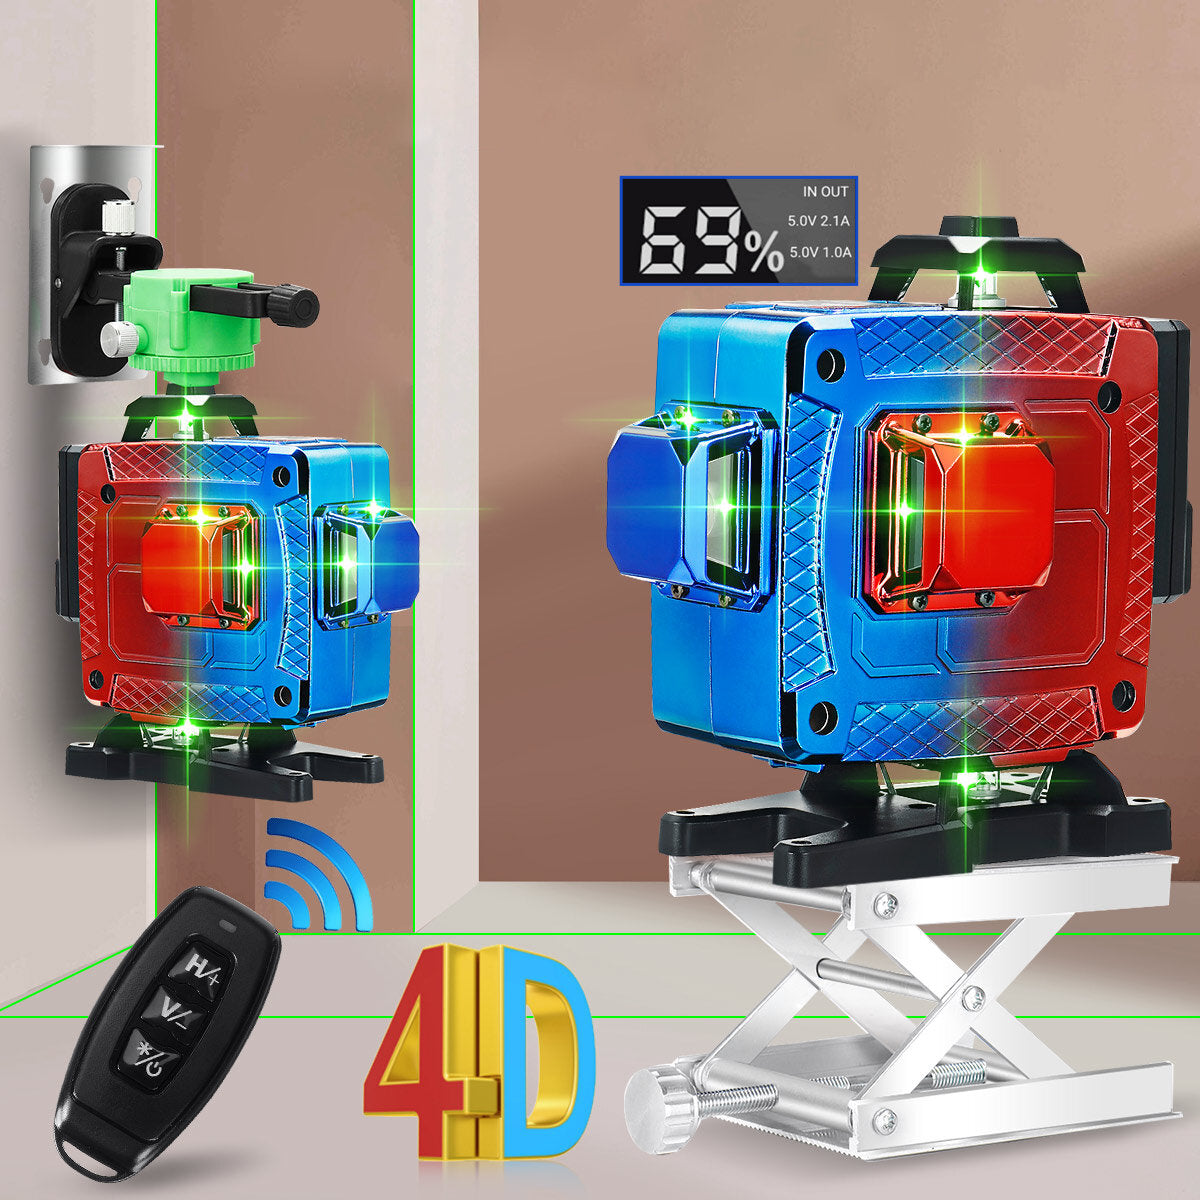 16 Line 4D Colorful Green Light Laser Level Single/Dual Battery 360 Horizontal Vertical Cross Measurement